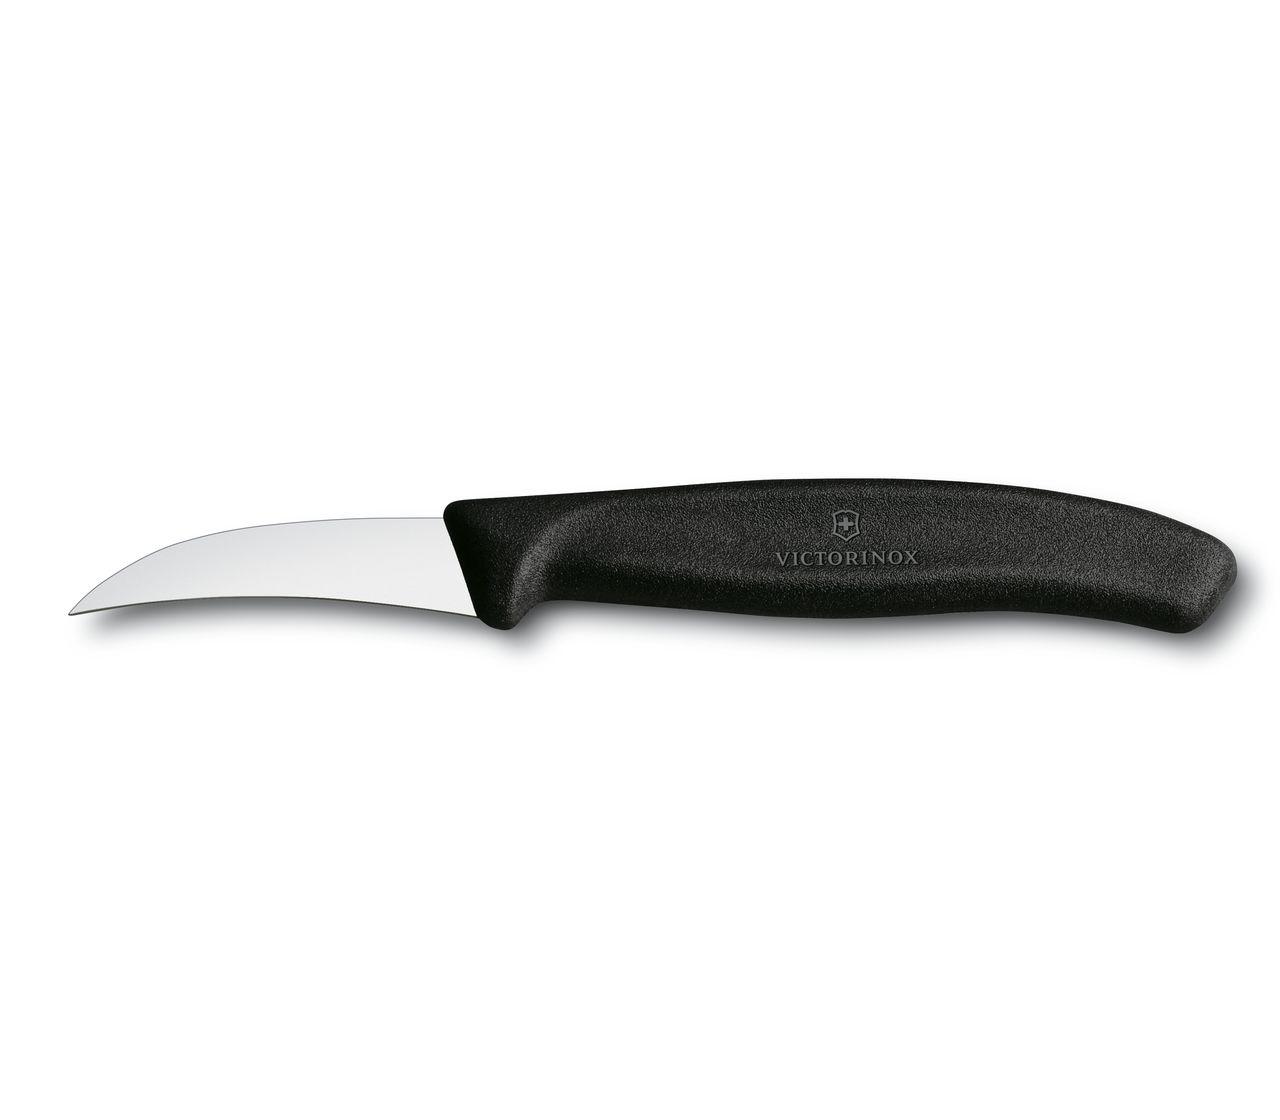 N. 6216 Curved Paring Knife